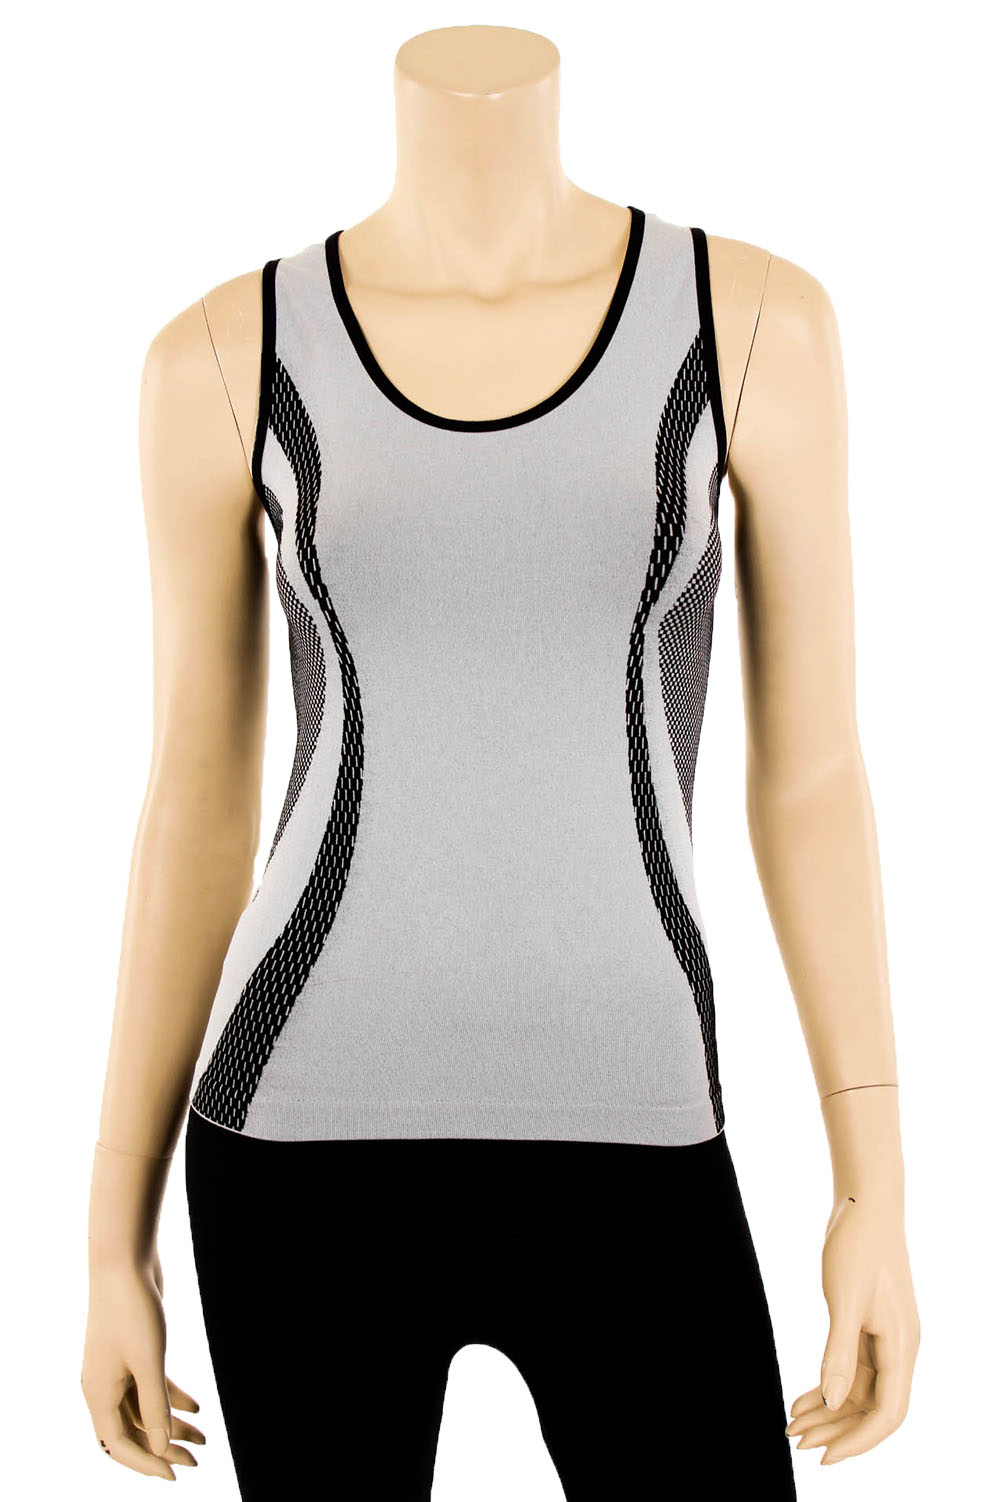 Womens Racerback Tank Top Workout Gym Sport Yoga Seamless Stretch One Size S M L Ebay 4529